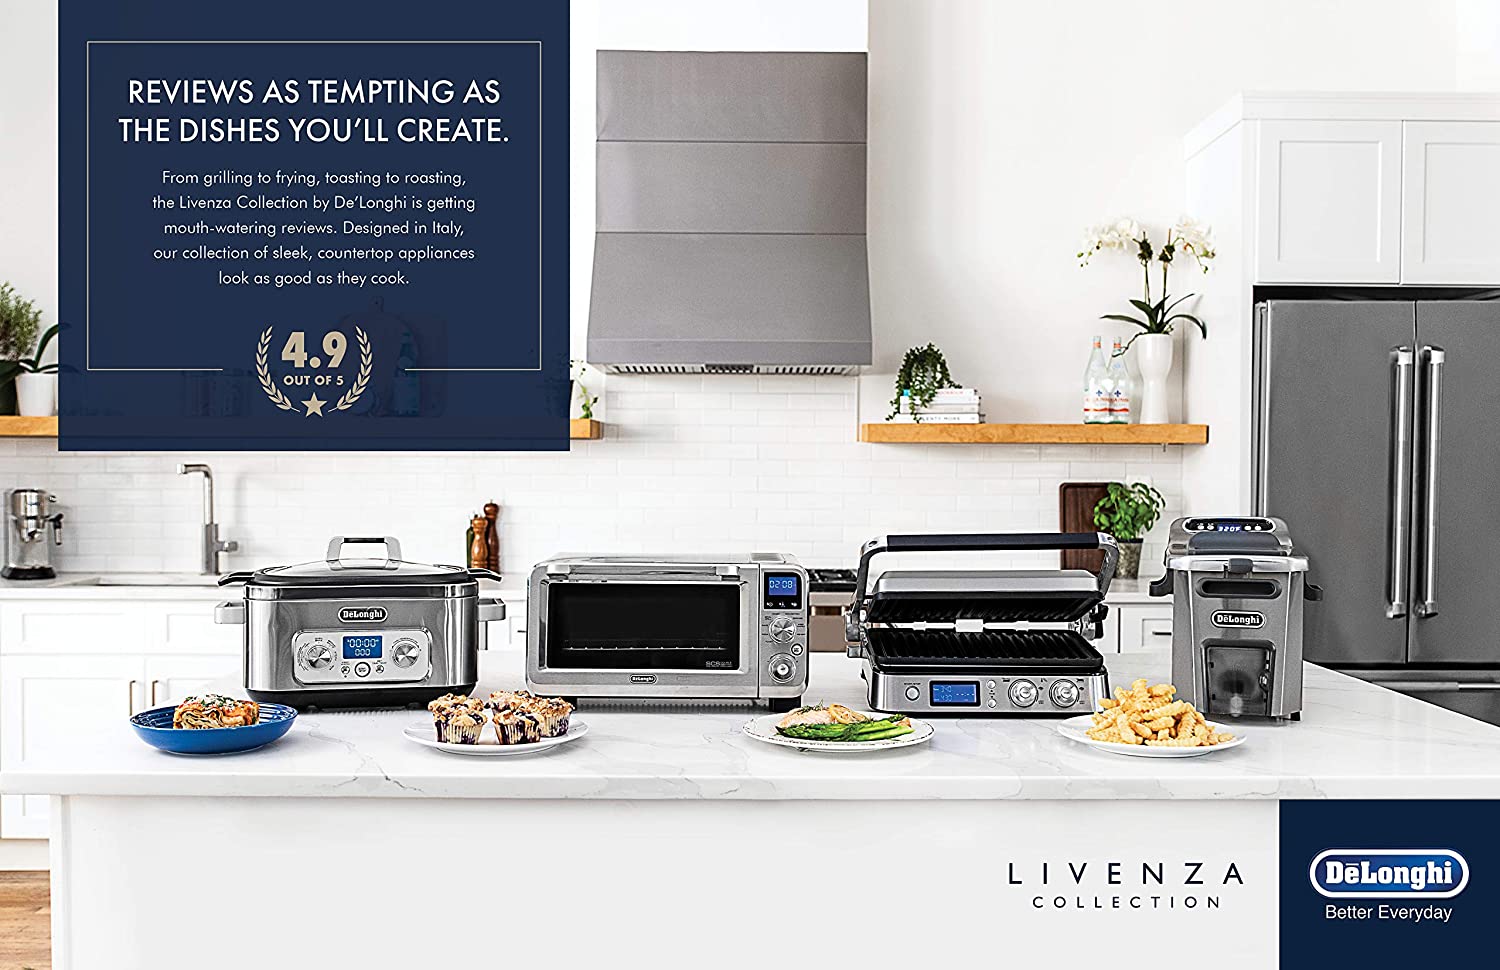 De'Longhi Livenza Compact Oven, 1800W Countertop Convection Toaster Oven